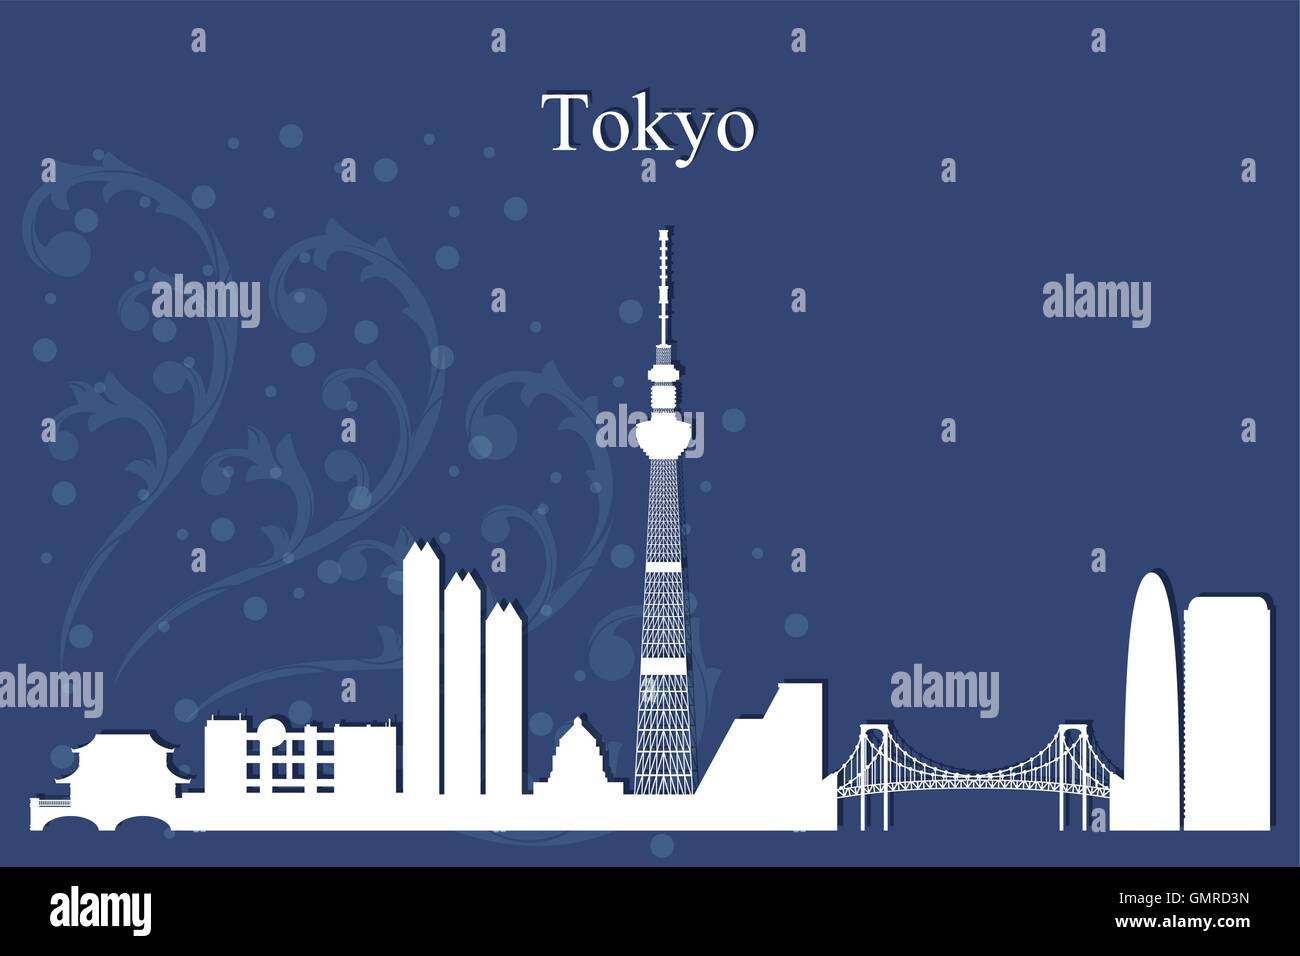 Tokyo city skyline silhouette on blue background Stock Vector